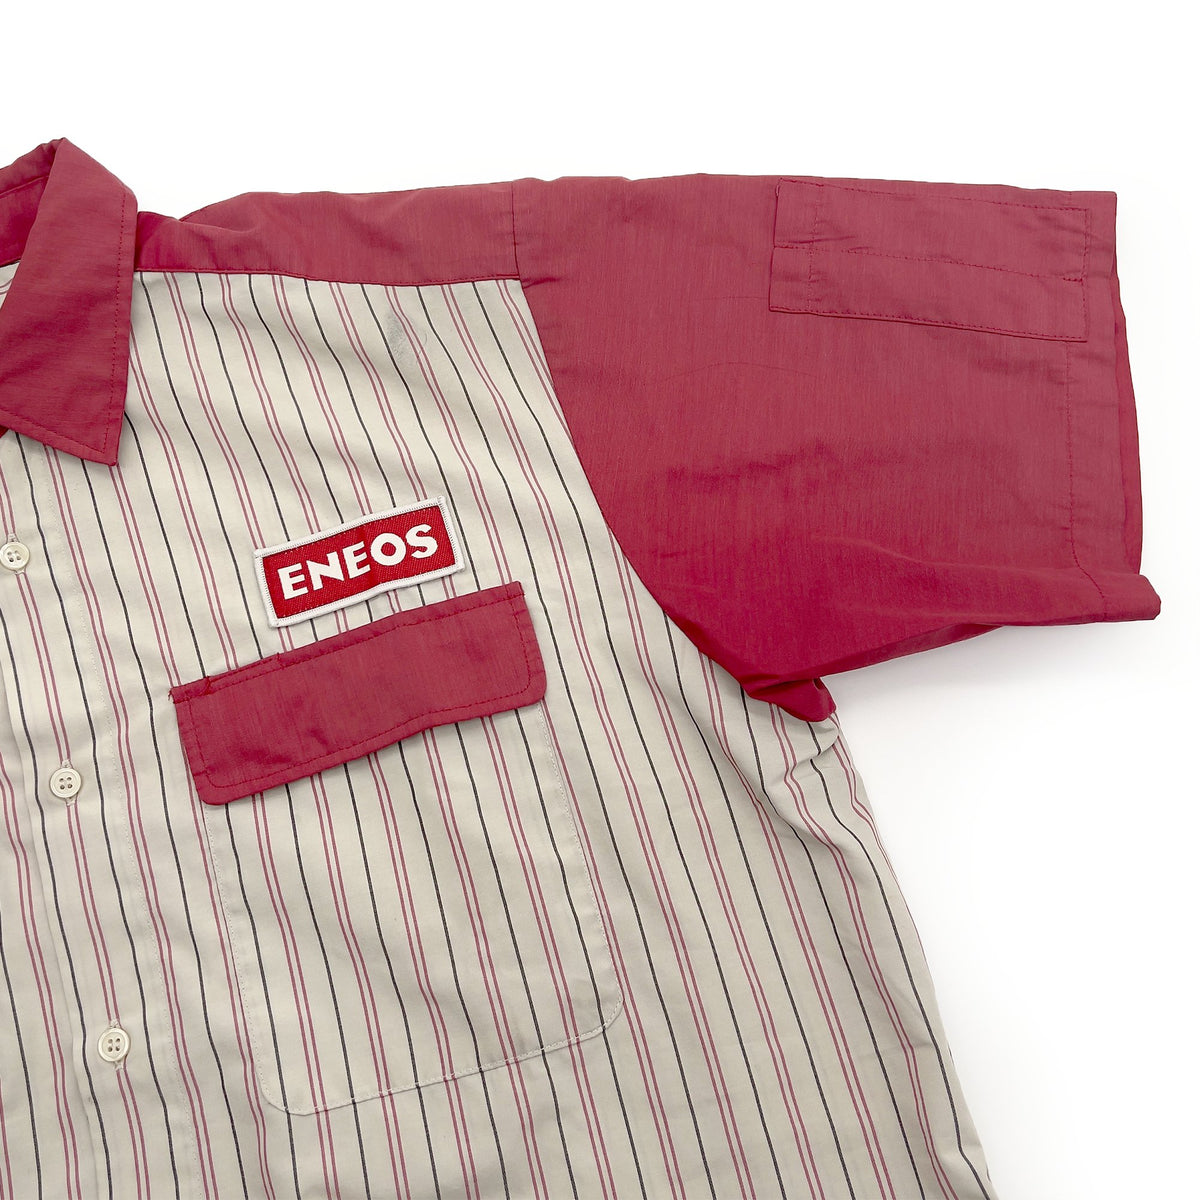 Retro Japan JDM Genuine ENEOS Oil Staff Short Sleeve Button Up Shirt Red - Sugoi JDM